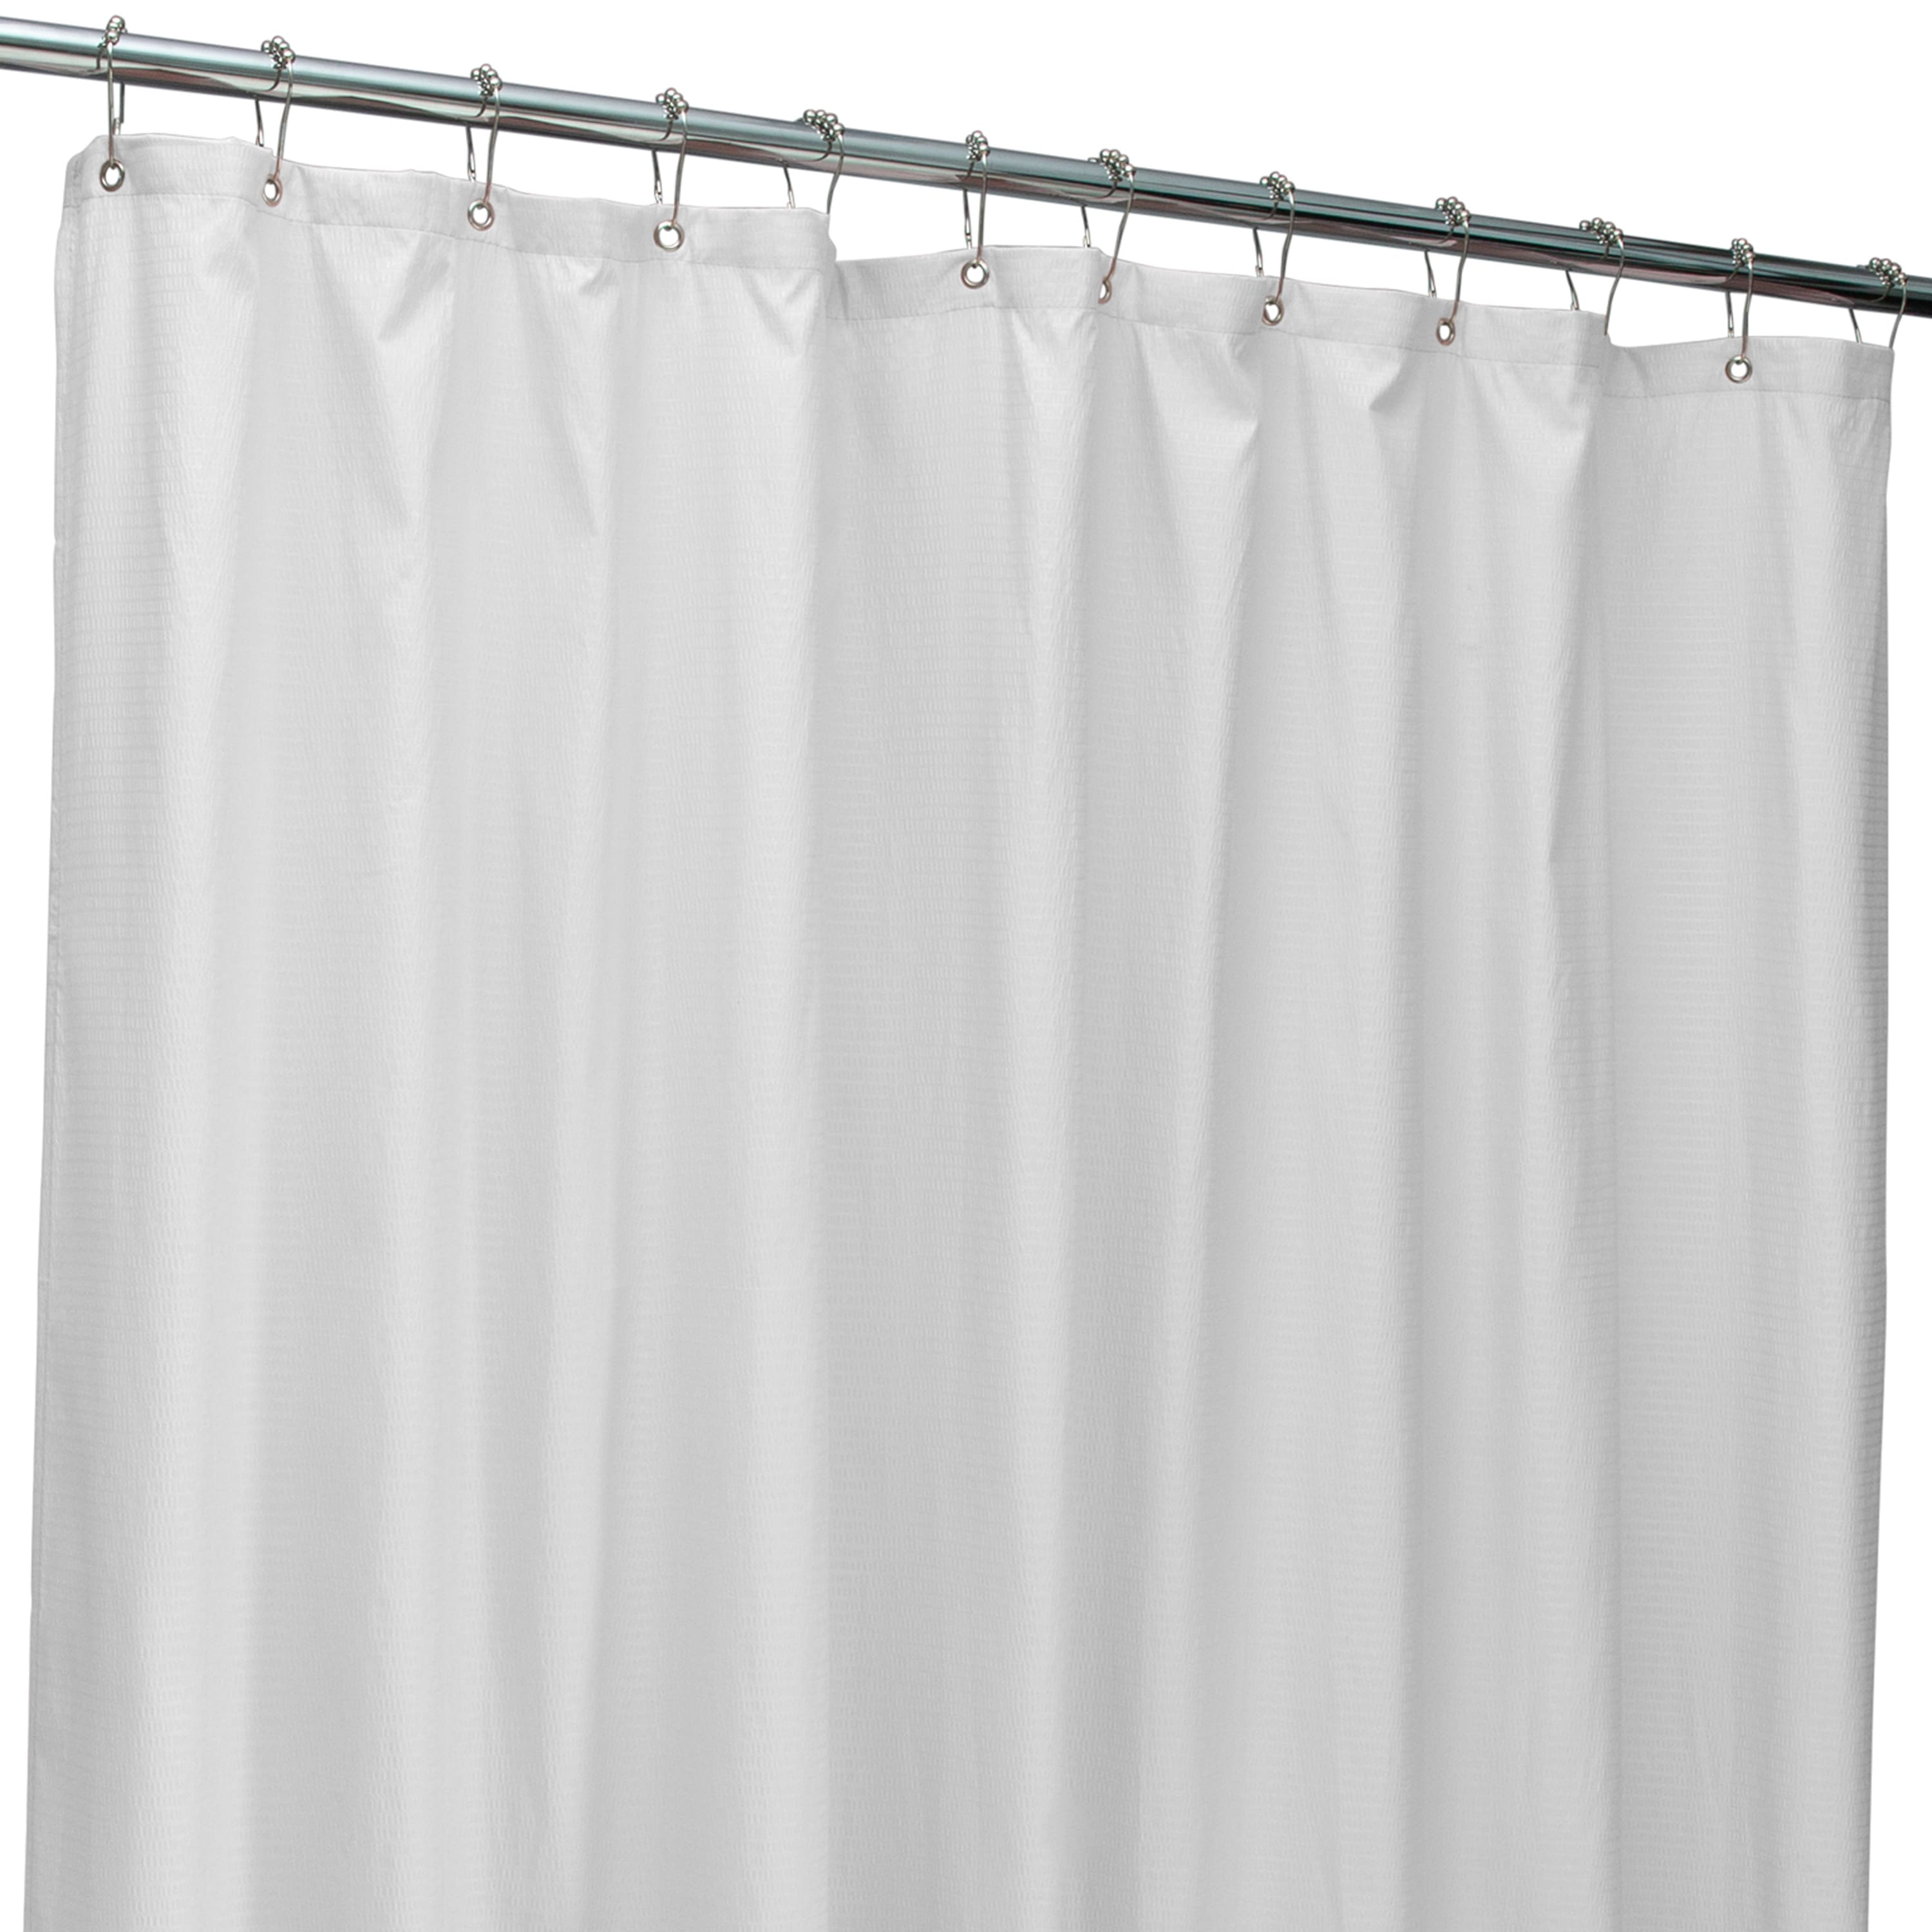 Bath Bliss Microfiber Soft Touch Dash Design Shower Curtain Liner